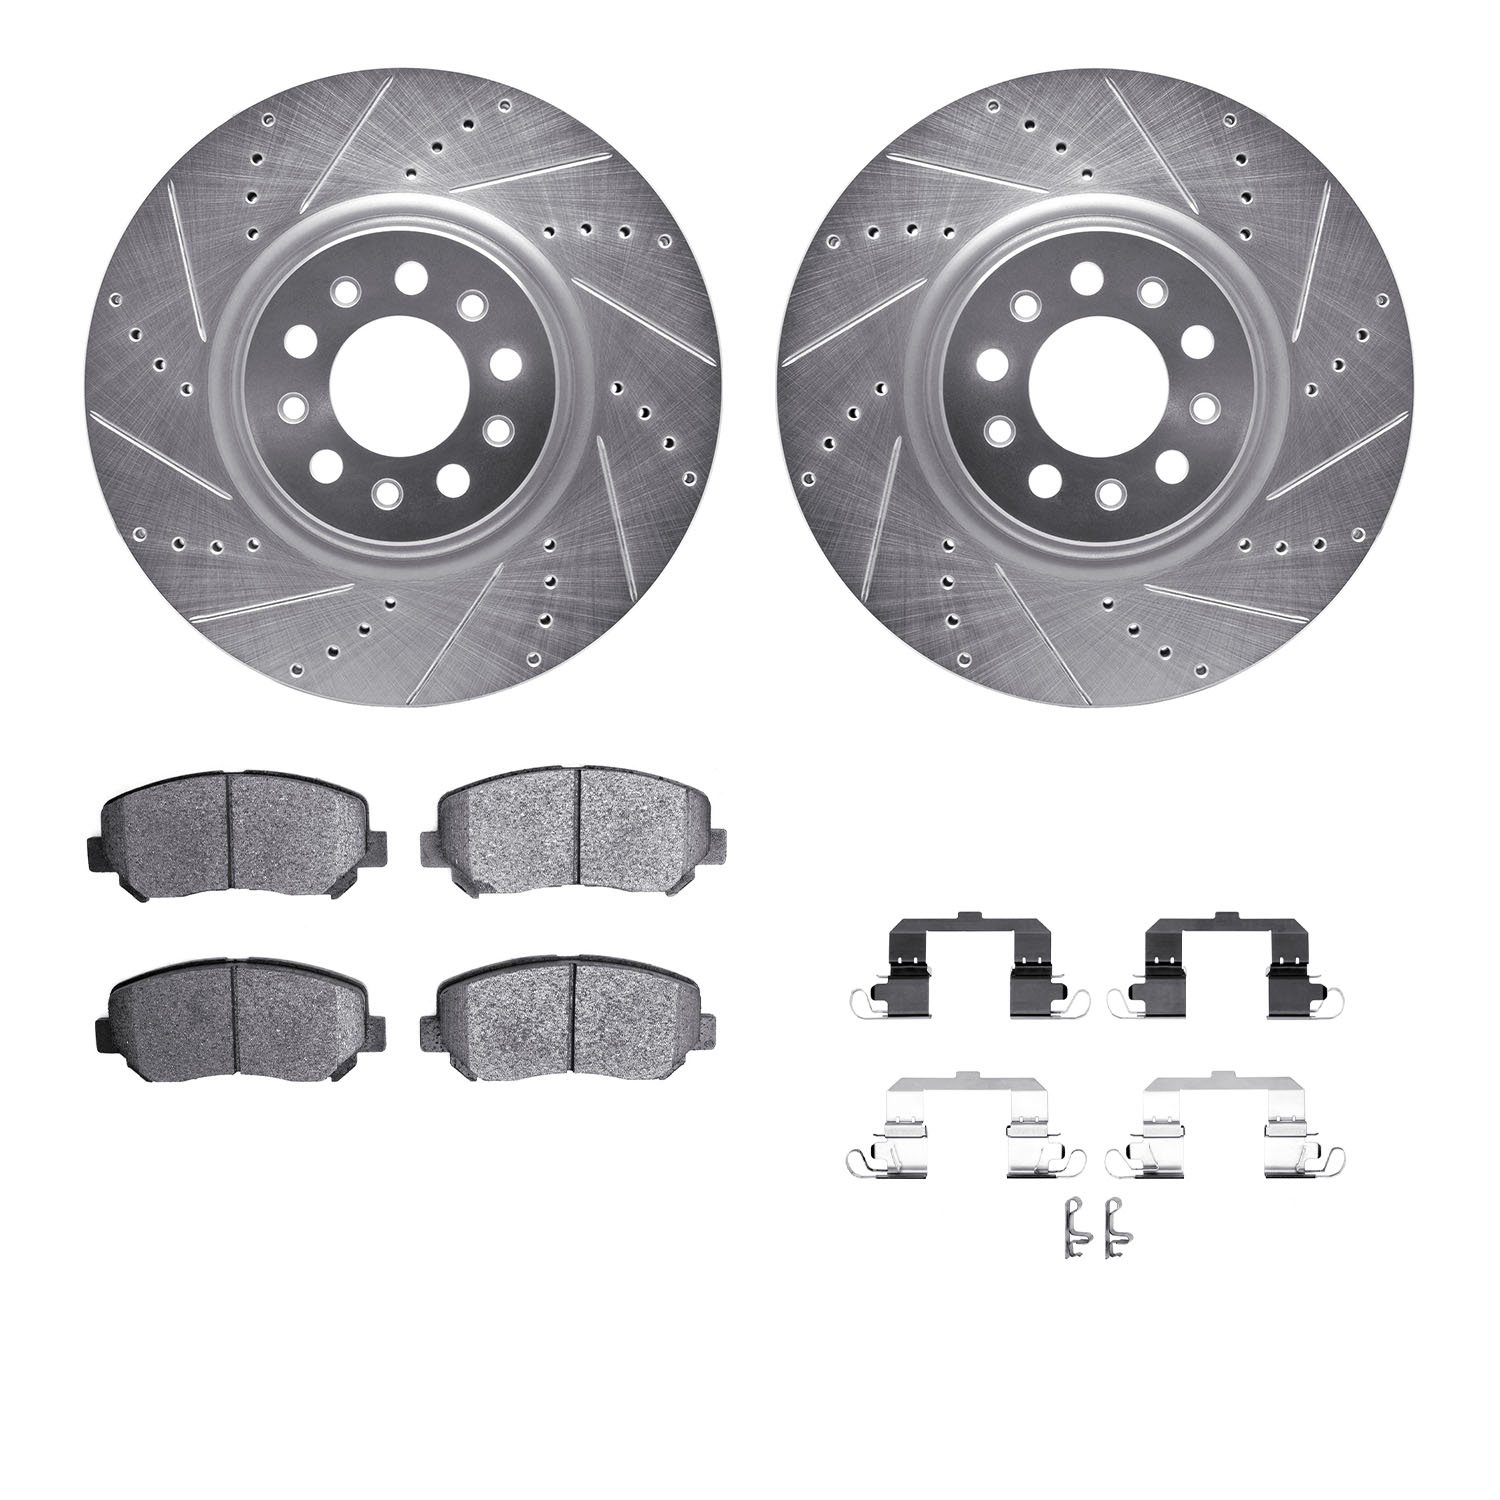 7312-42041 Drilled/Slotted Brake Rotor with 3000-Series Ceramic Brake Pads Kit & Hardware [Silver], 2015-2015 Mopar, Position: F